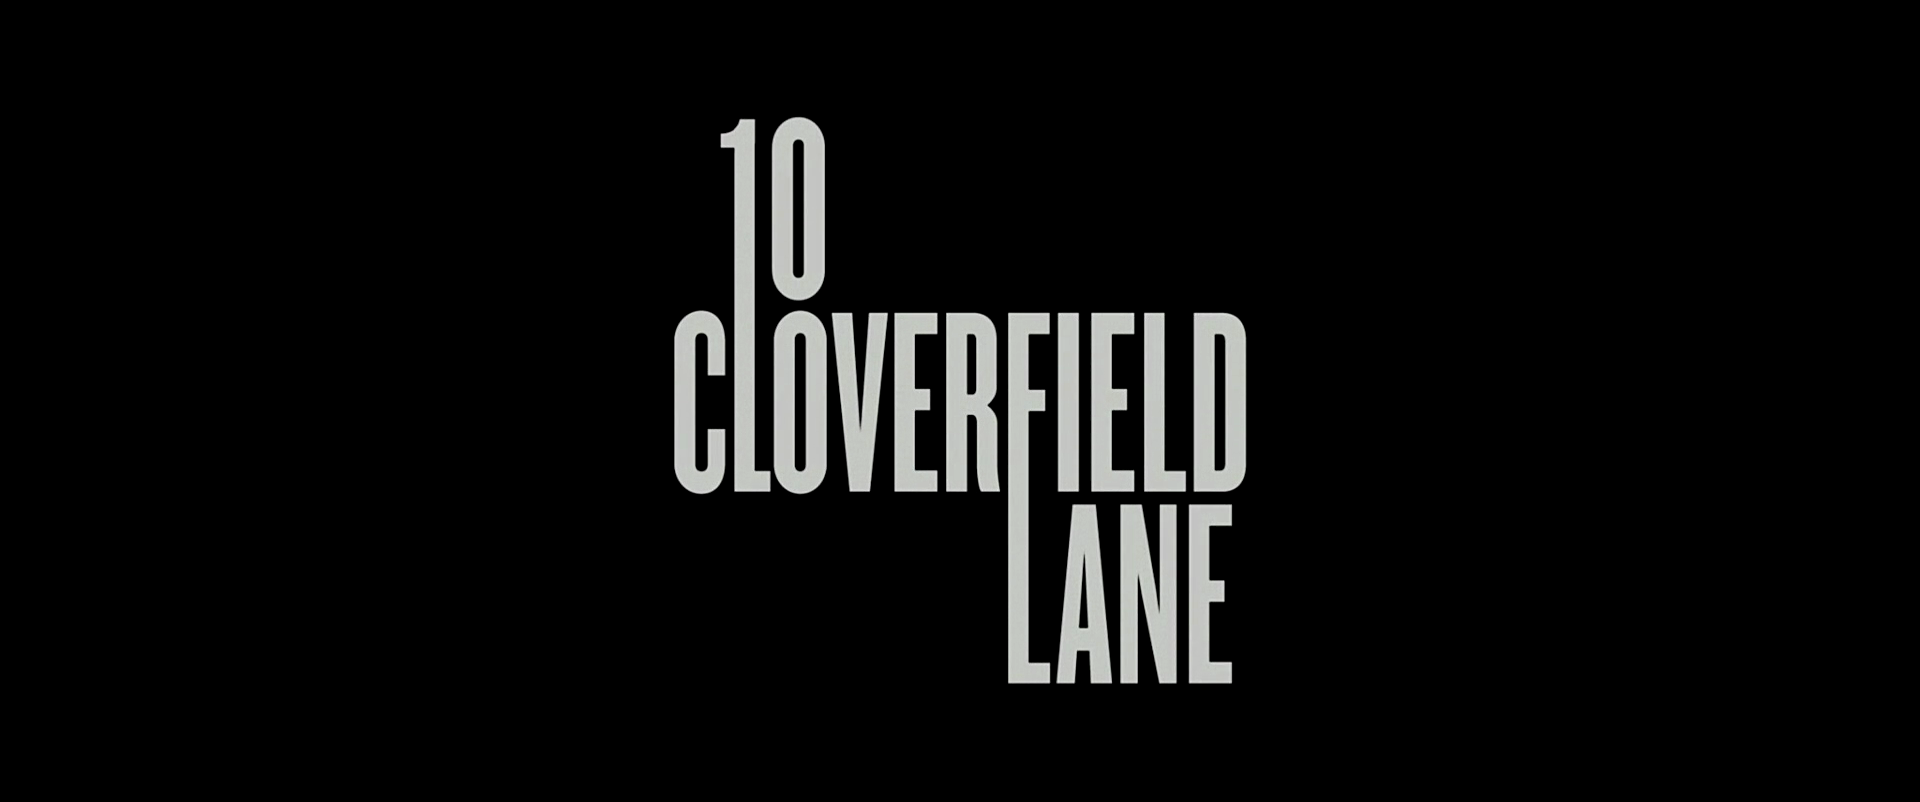 10 cloverfield lane free movie watch